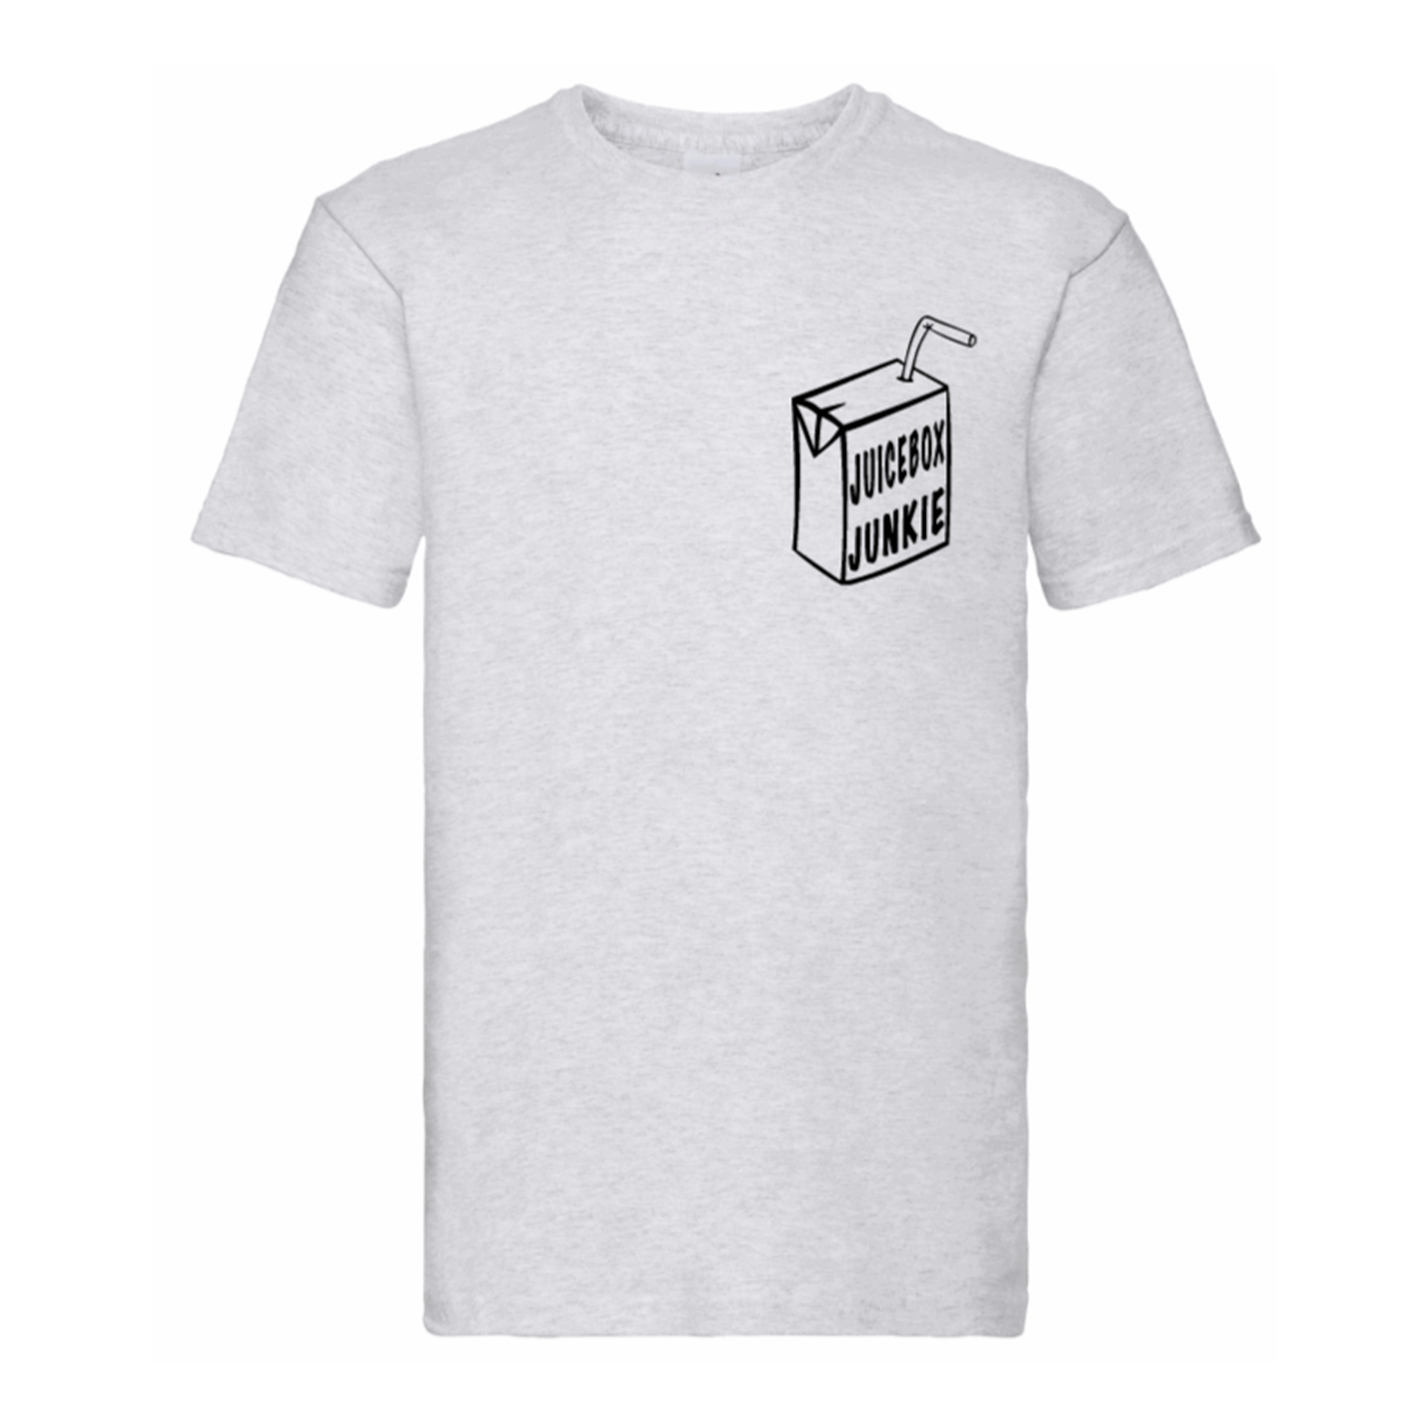 Juicebox Junkie Kids T Shirt